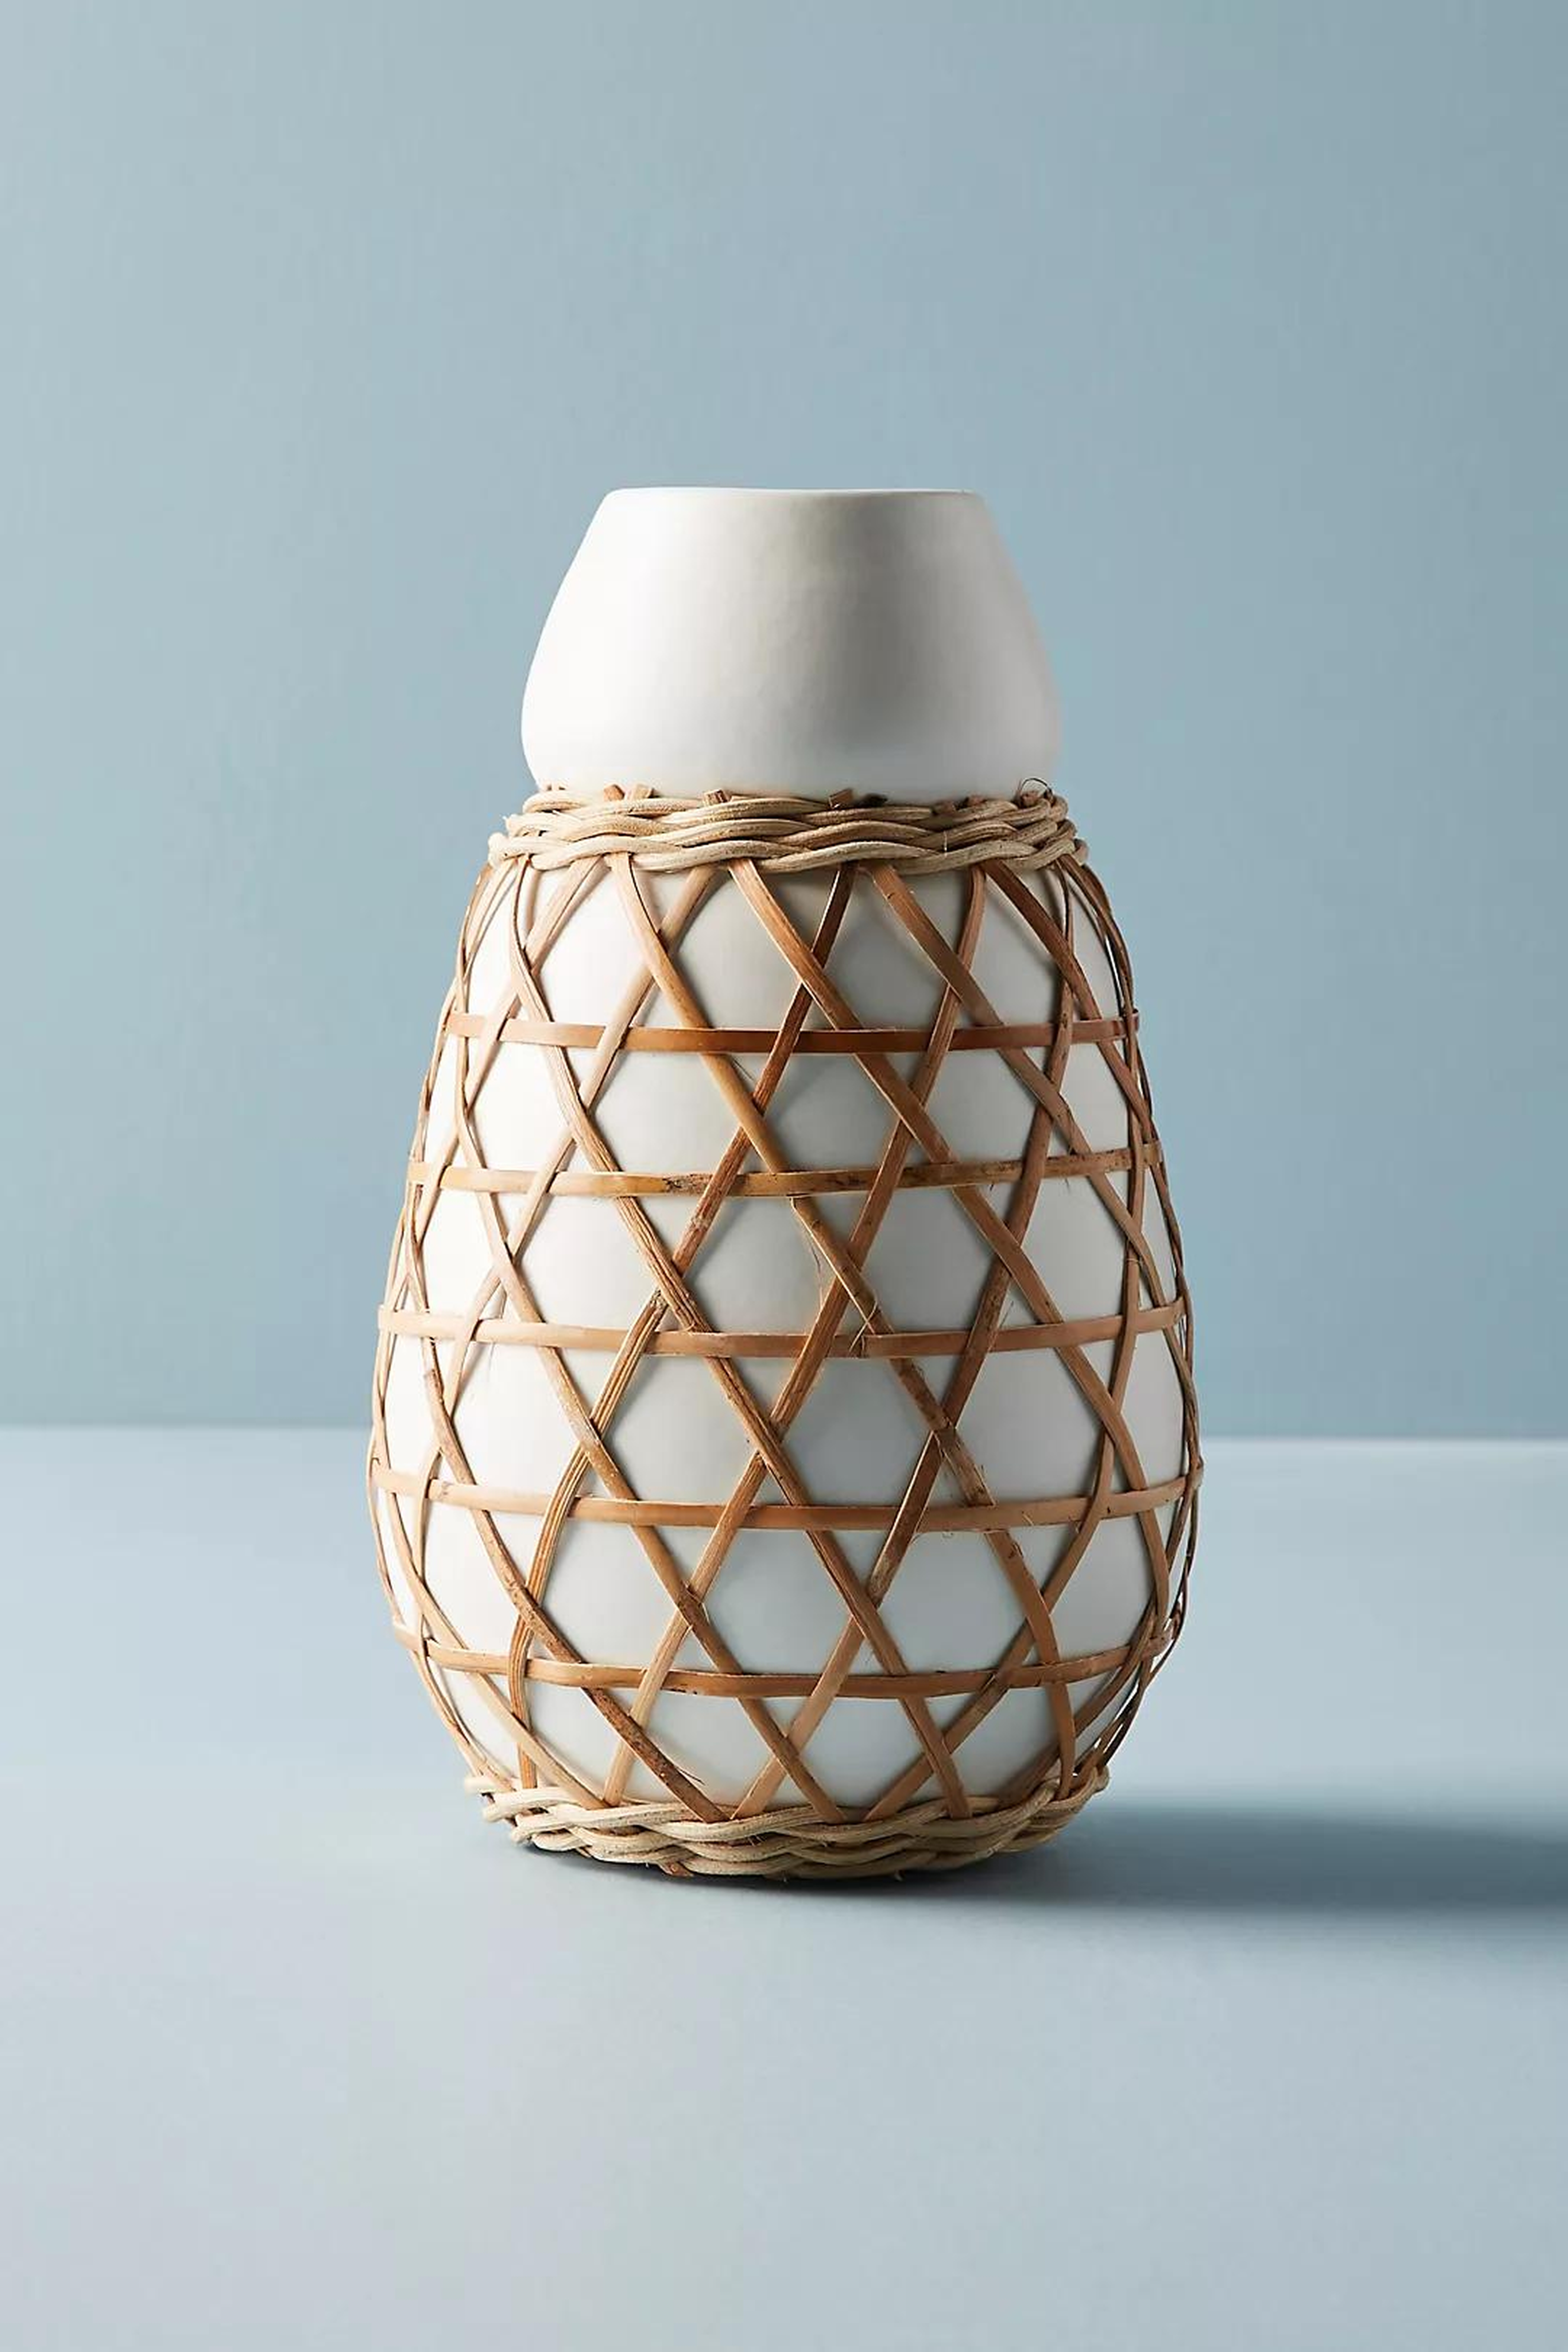 Woven Grass Vase - Anthropologie